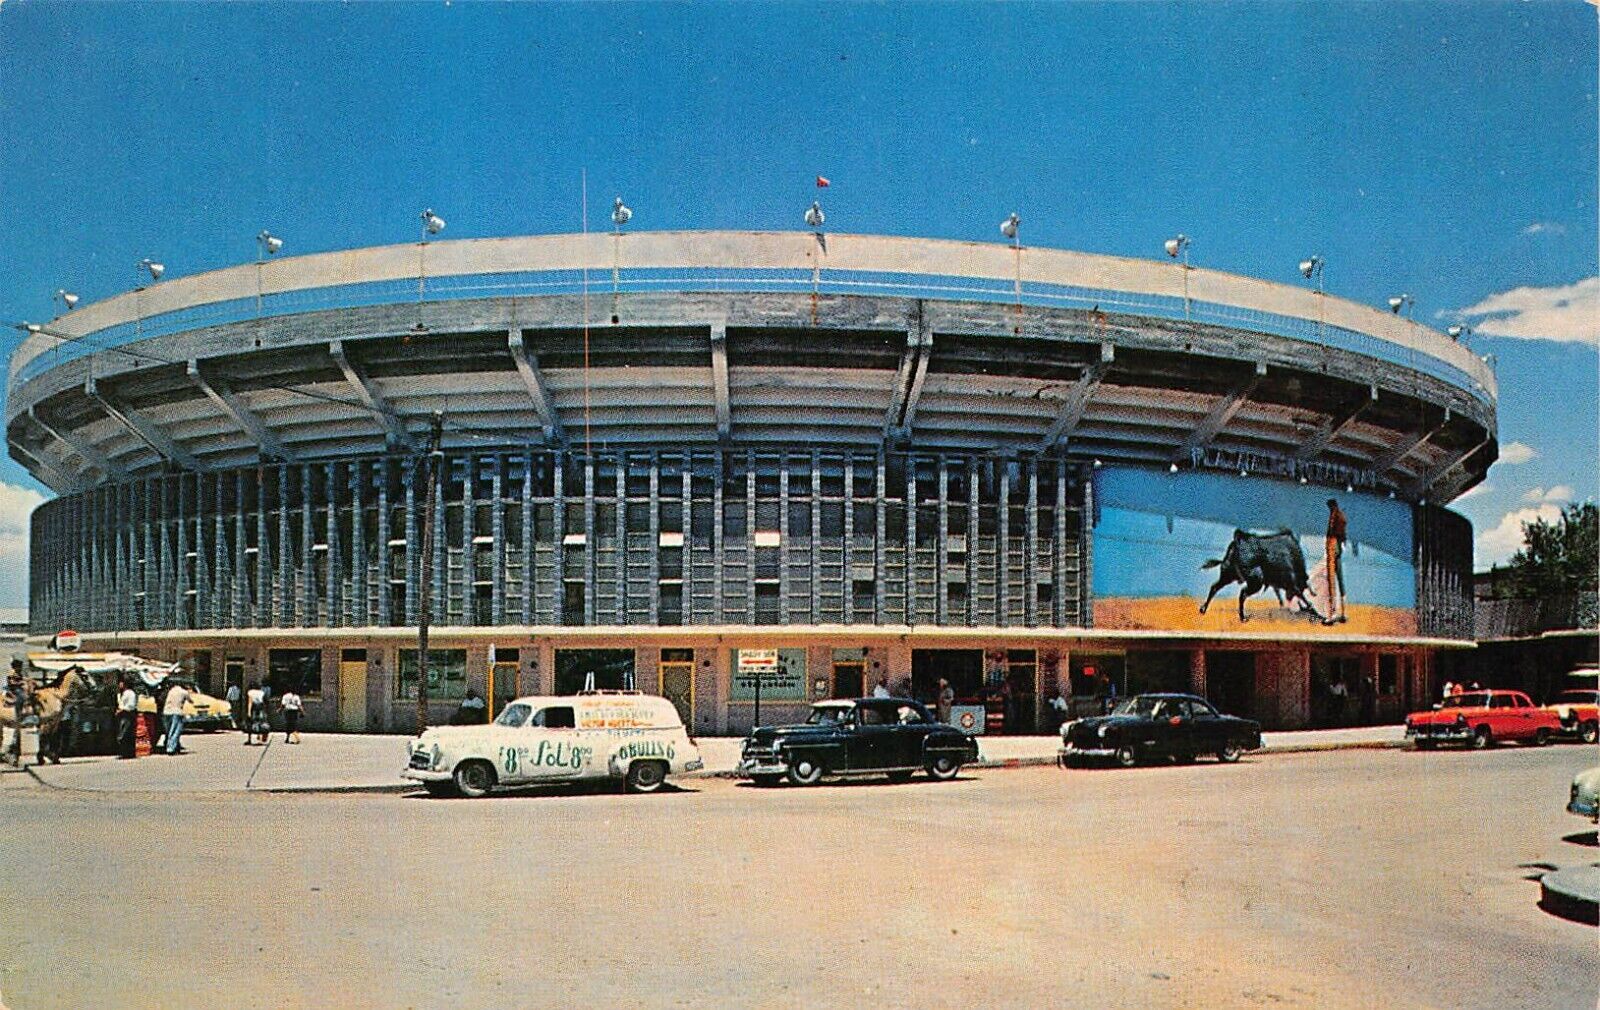 Ciudad Juarez Mexico Plaza De Toros Bullfighting Arena Stadium Vtg Postcard Z3